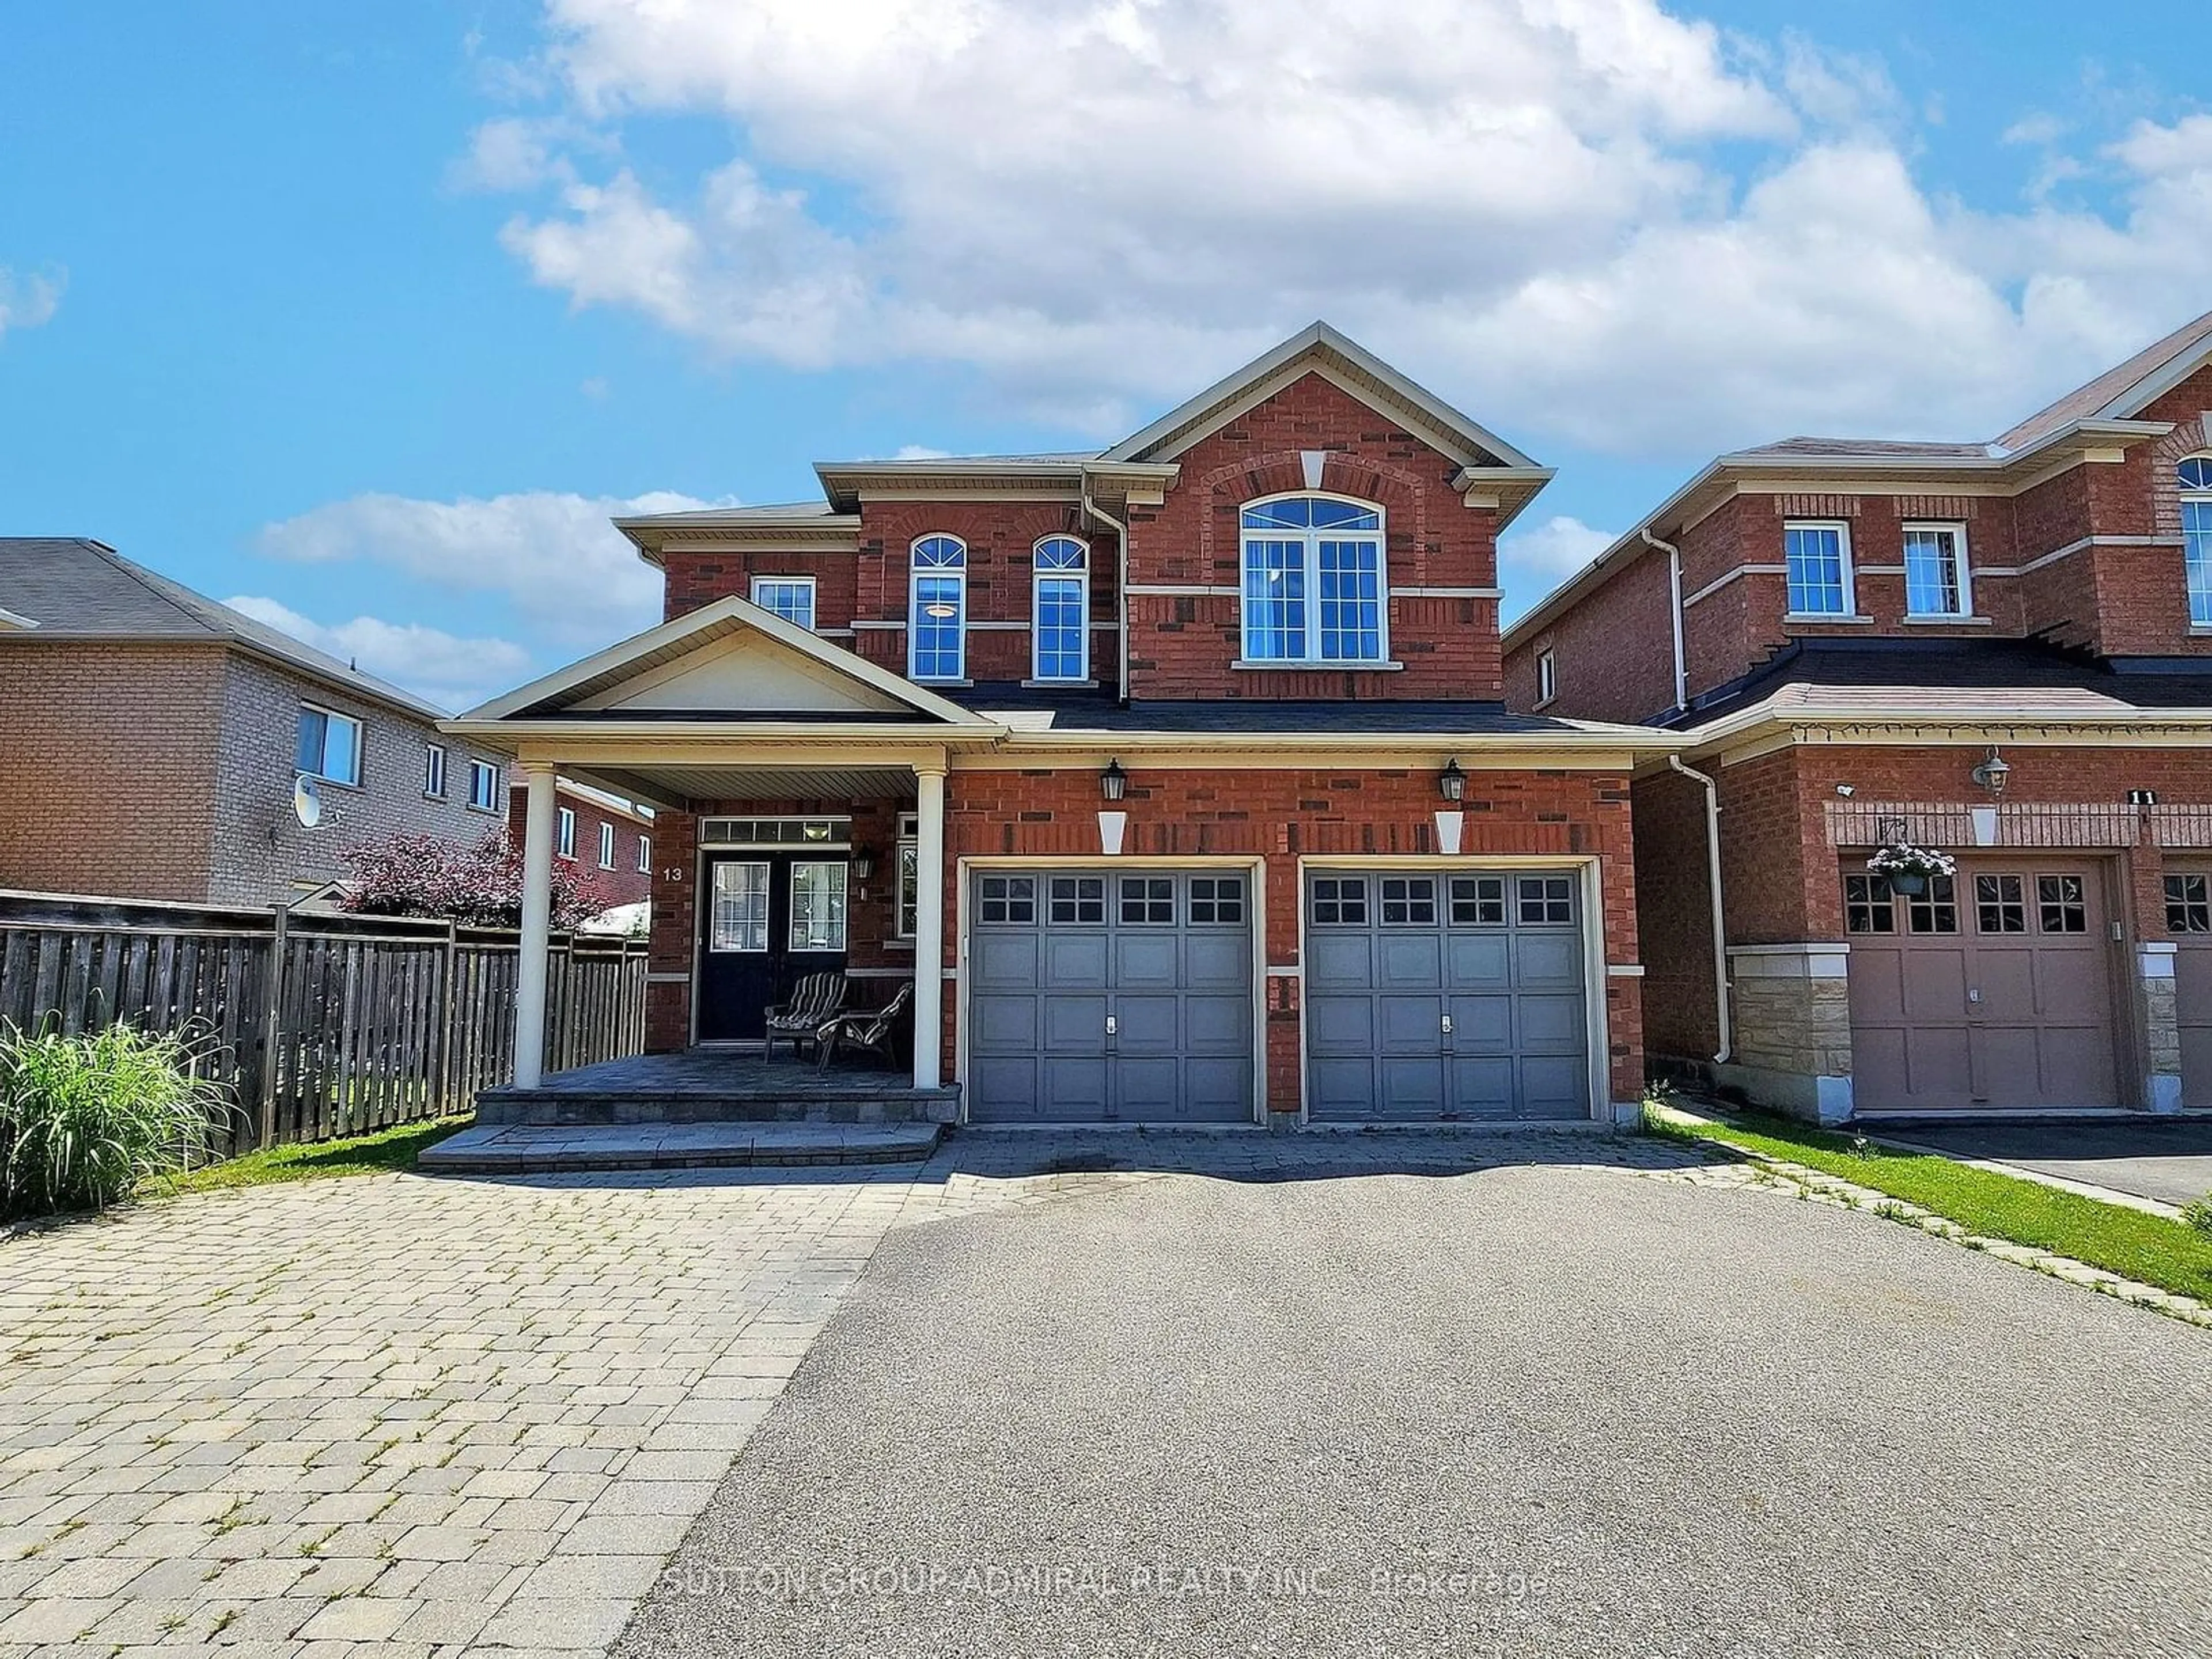 Home with brick exterior material for 13 Fallgate Dr, Brampton Ontario L6X 0R5